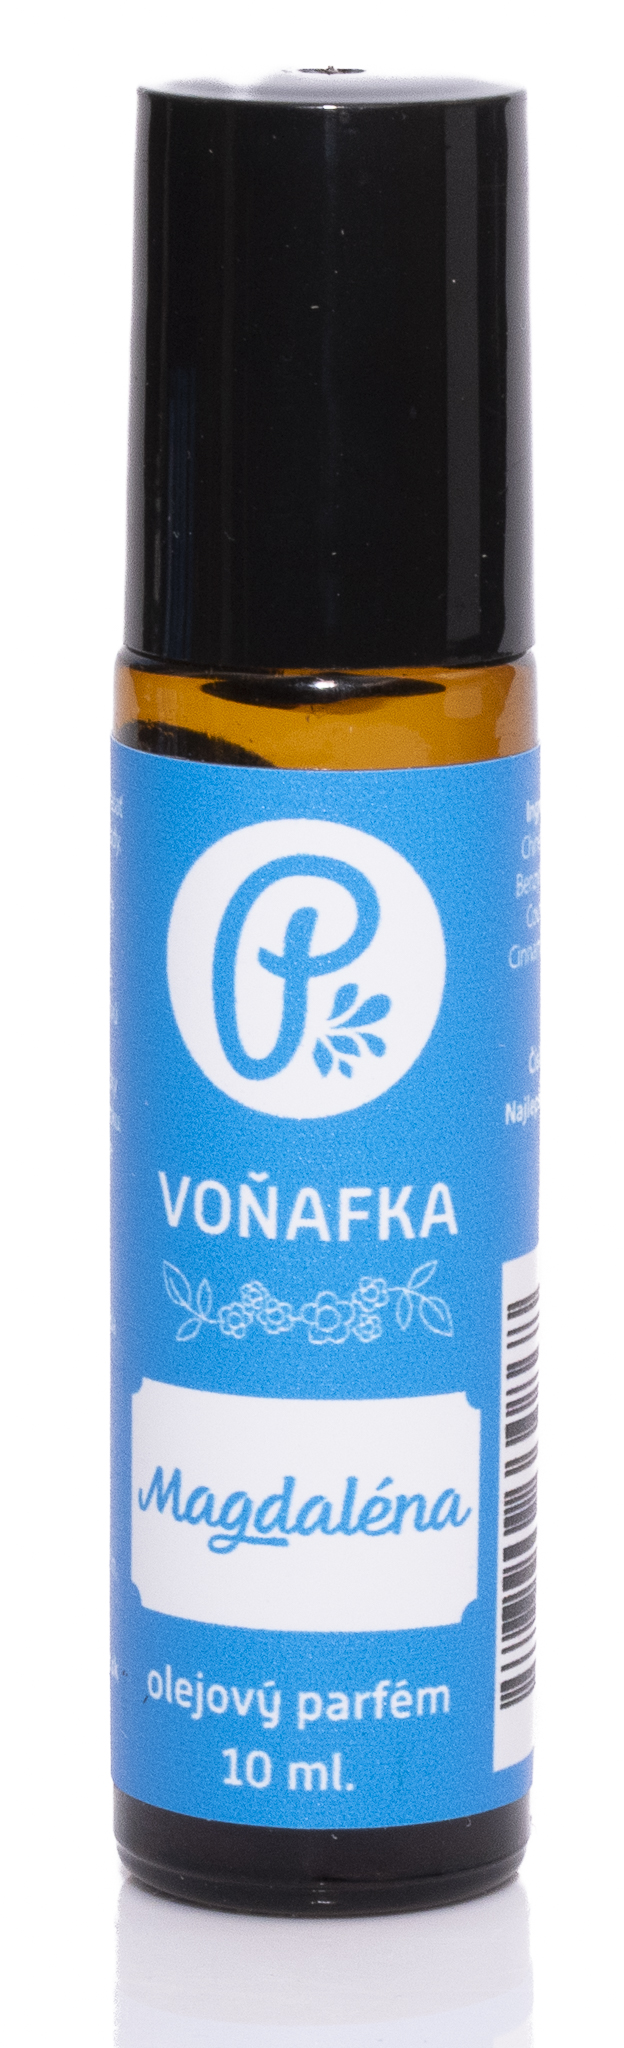 PANAKEIA Voňafka - Magdaléna 10ml olejový parfém